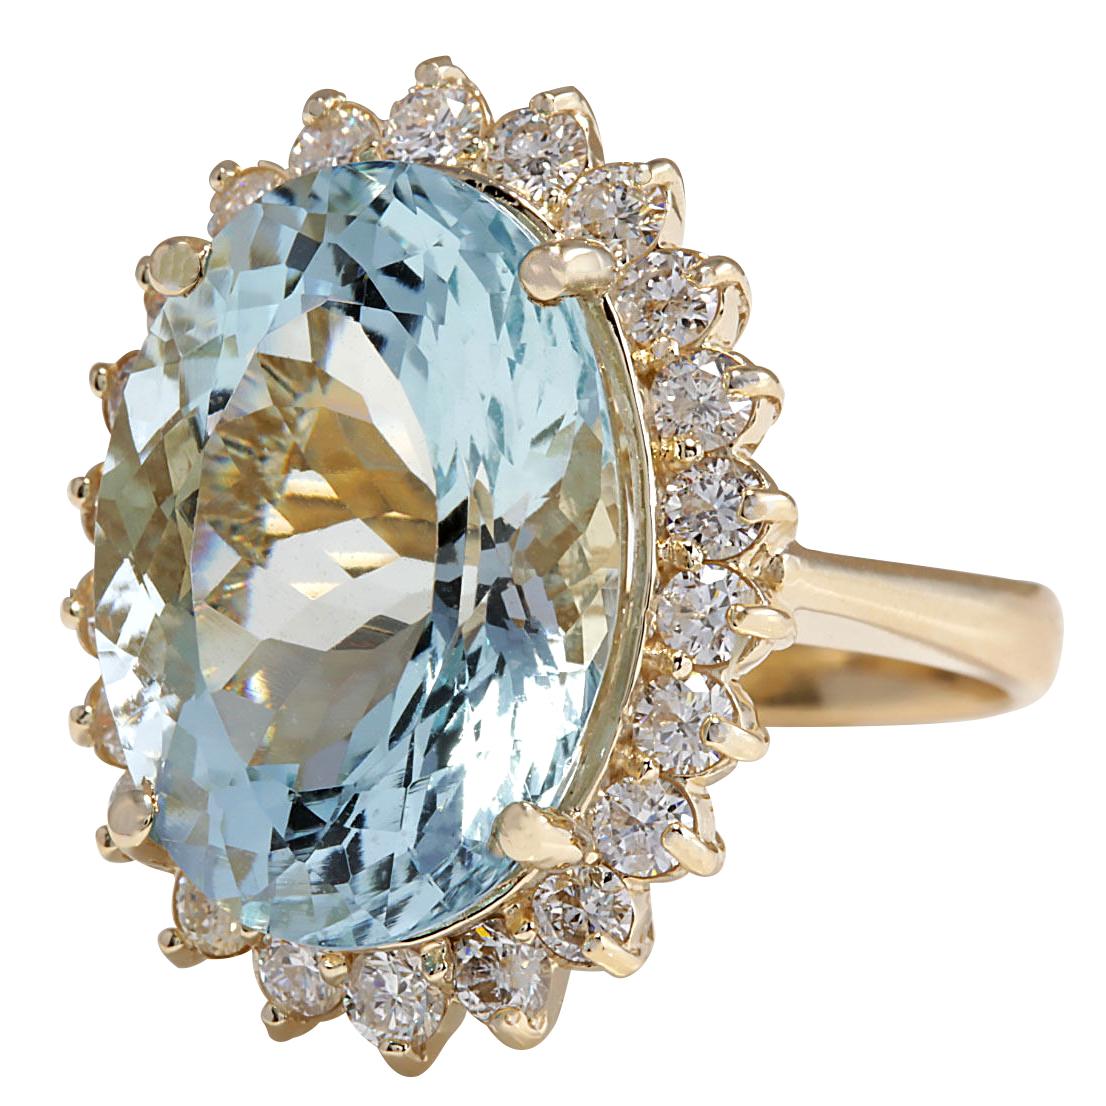 5.78 Carat Natural Aquamarine 14 Karat Yellow Gold Diamond Ring
Stamped: 14K Yellow Gold
Total Ring Weight: 6.2 Grams
Total Natural Aquamarine Weight is 4.88 Carat (Measures: 14.00x10.00 mm)
Color: Blue
Total Natural Diamond Weight is 0.90